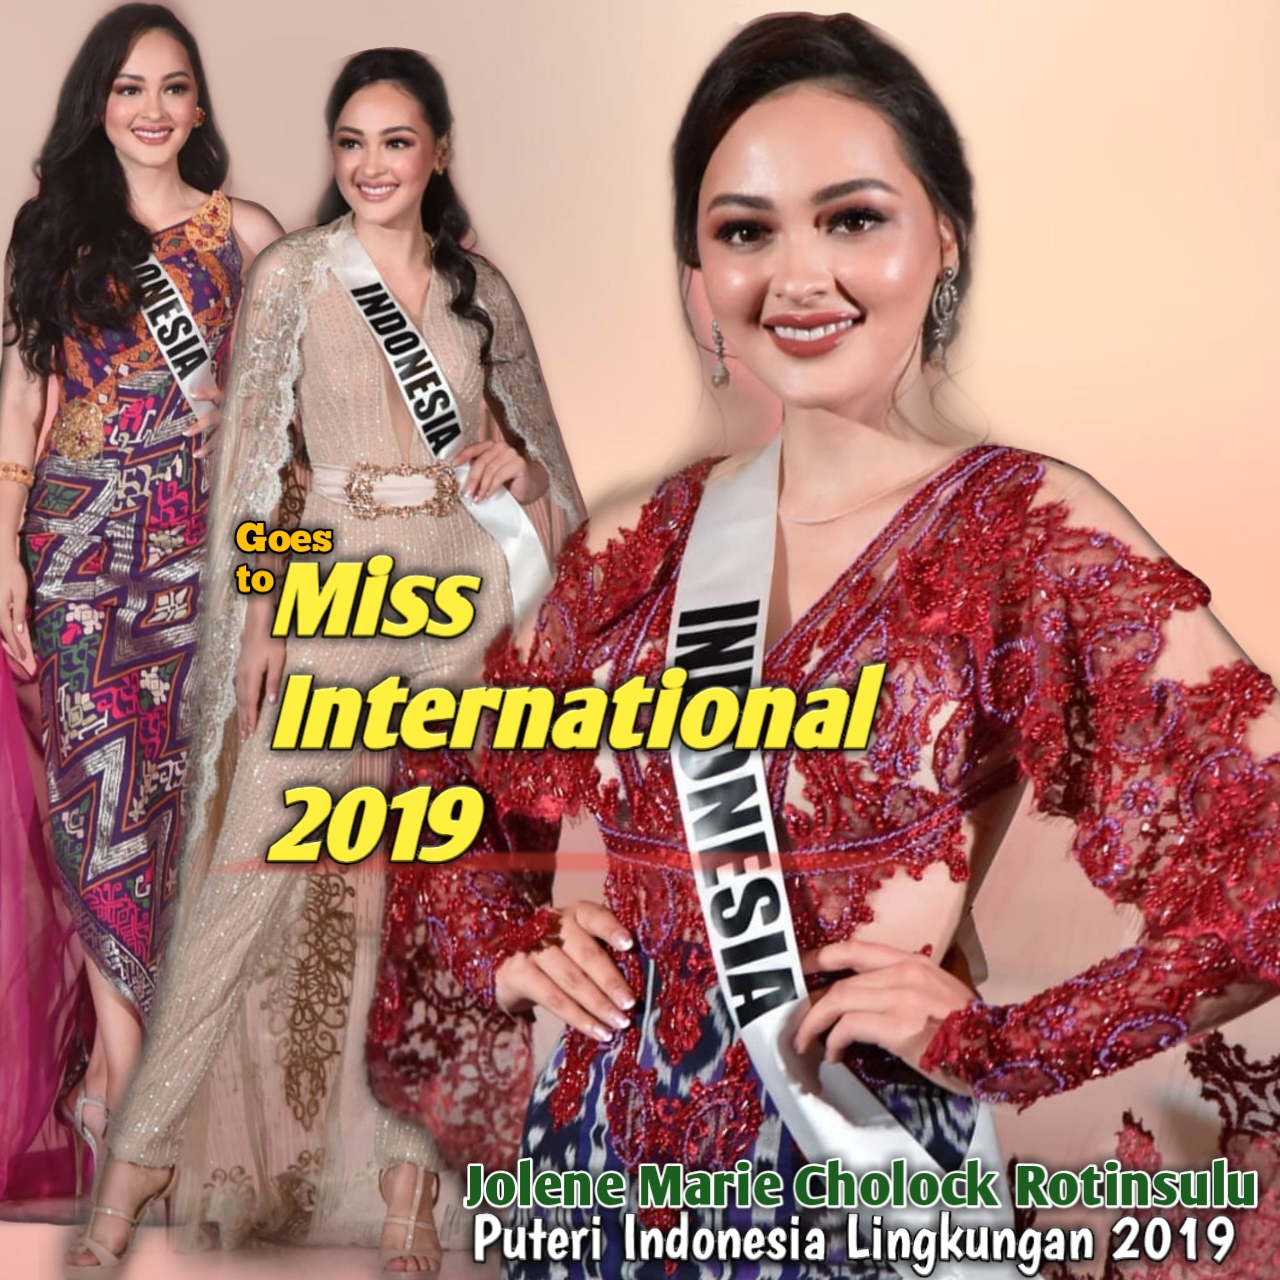 3 Outfit Puteri Indonesia Lingkungan 2019 buat Miss International 2019